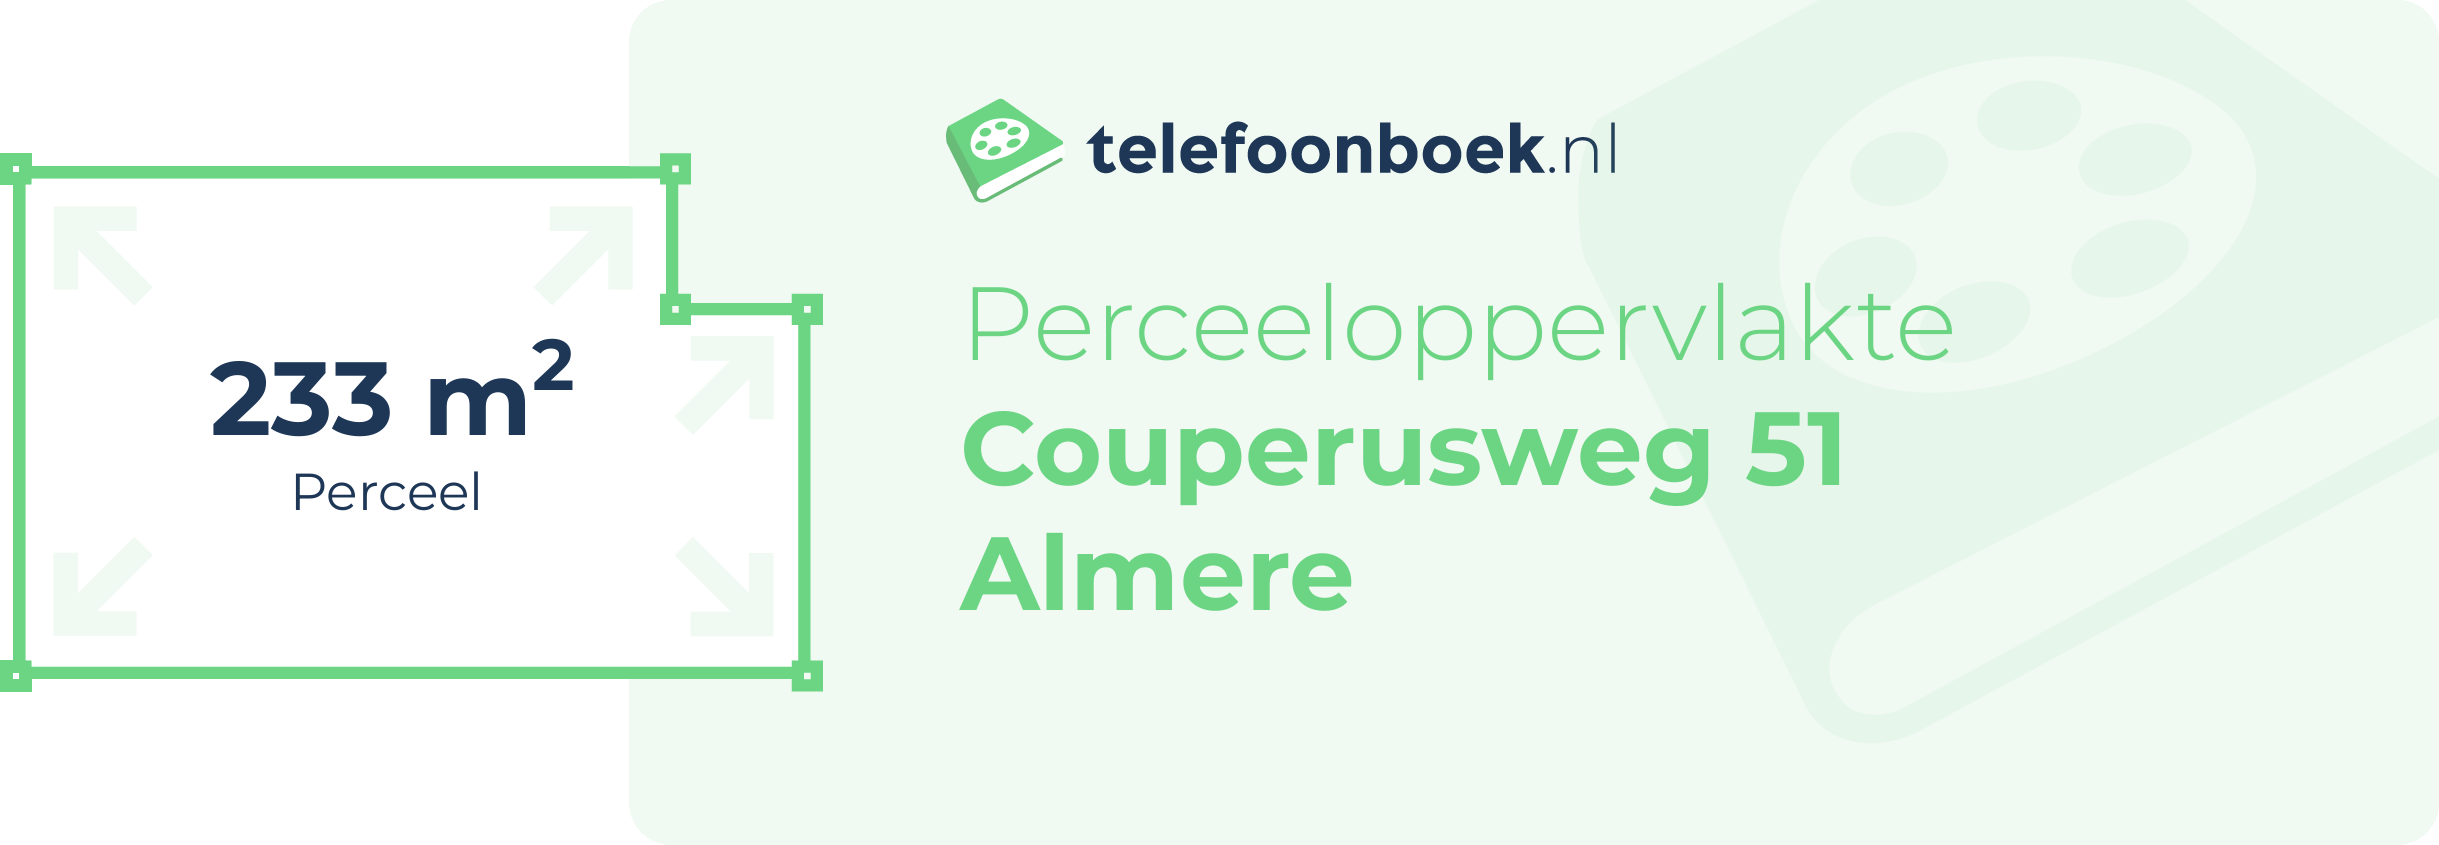 Perceeloppervlakte Couperusweg 51 Almere